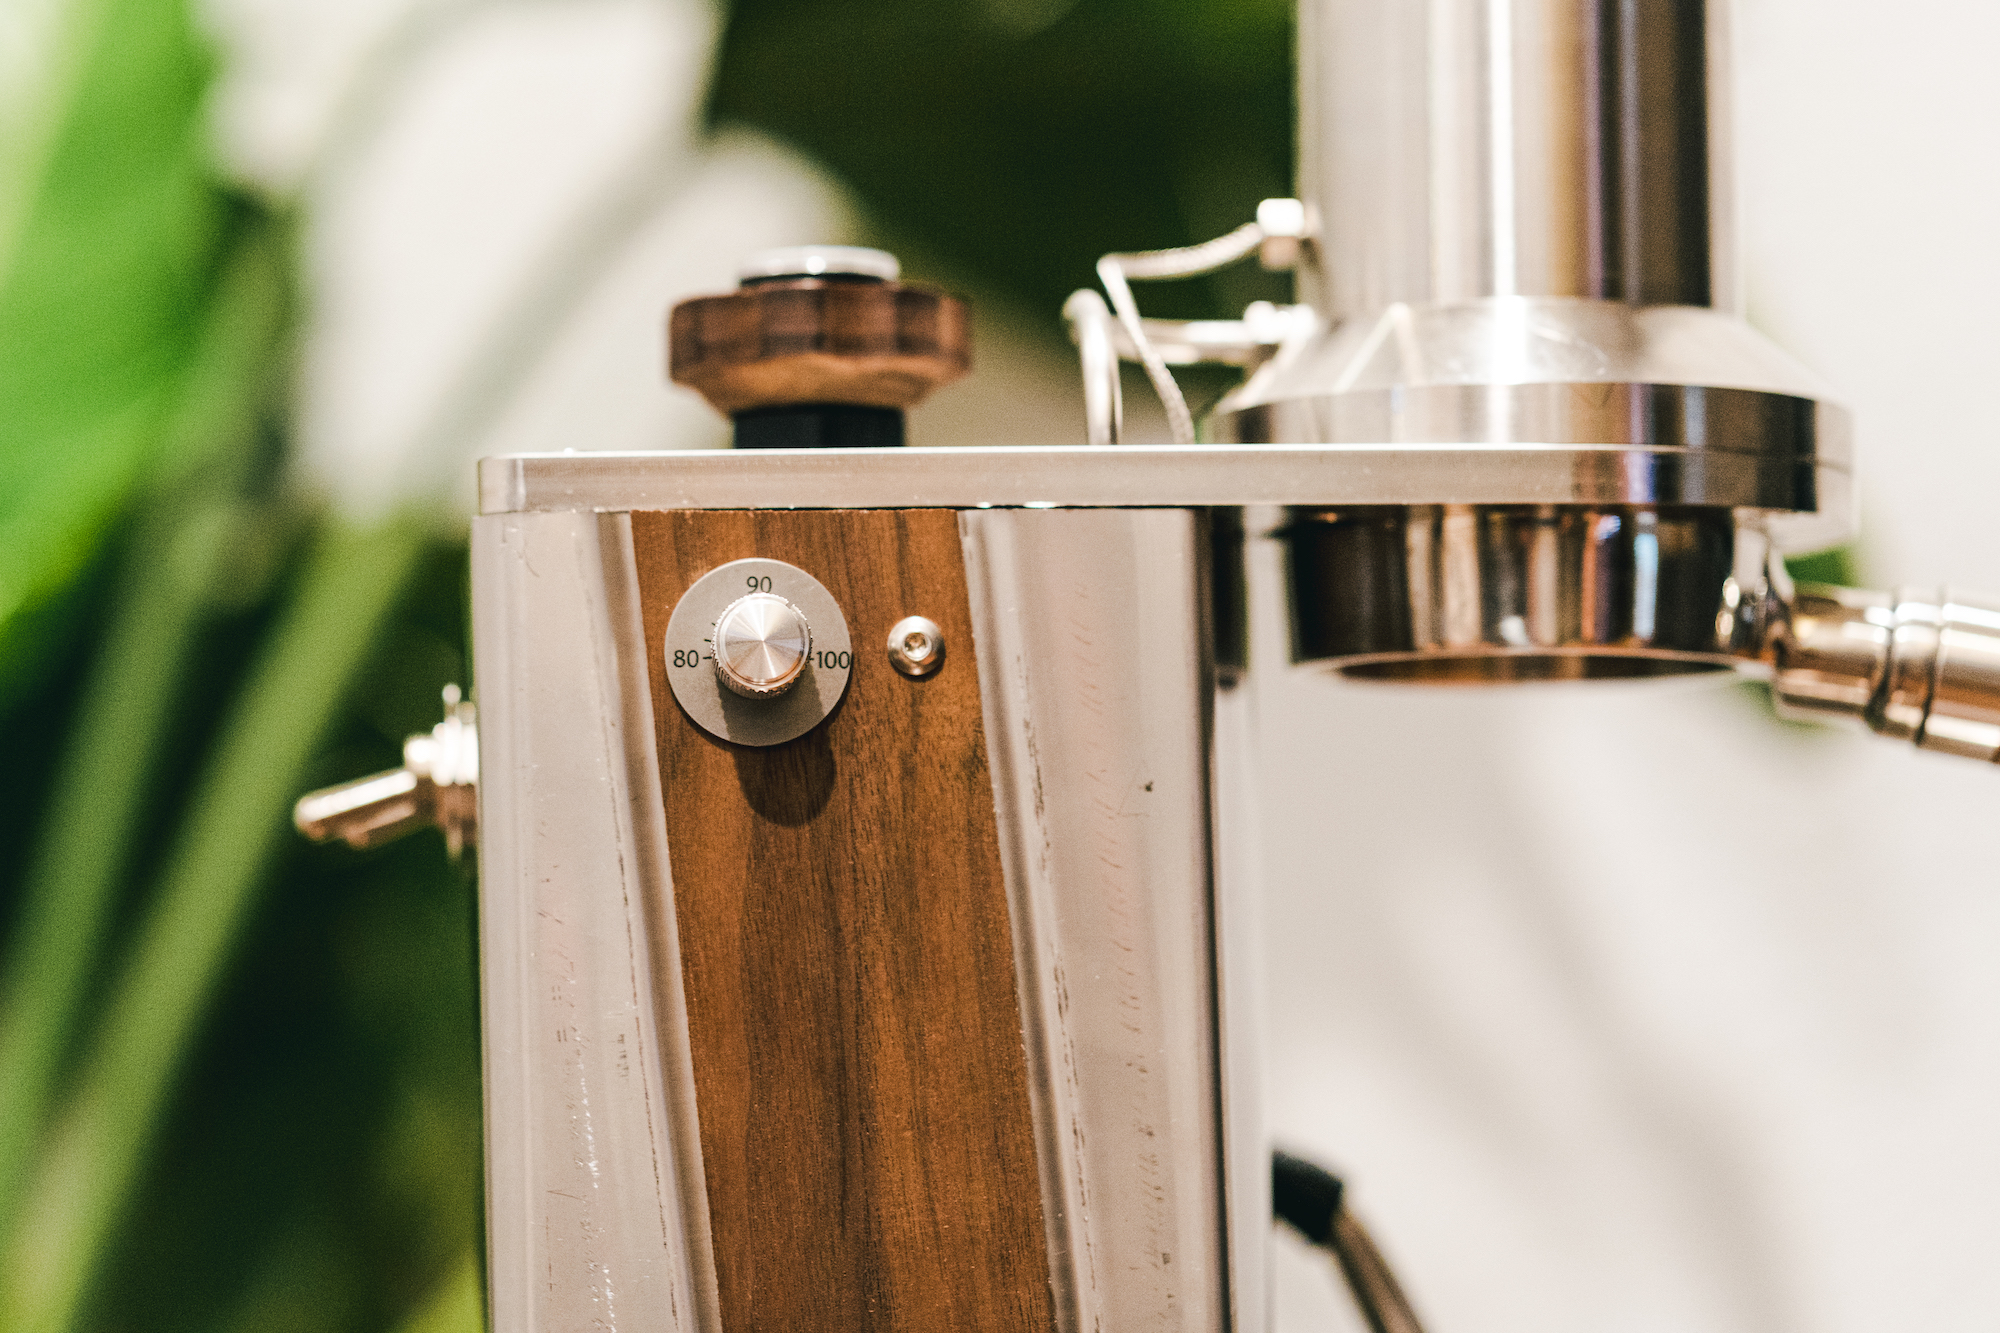 Modern Lever Espresso That Won't Break the Bank: The Argos